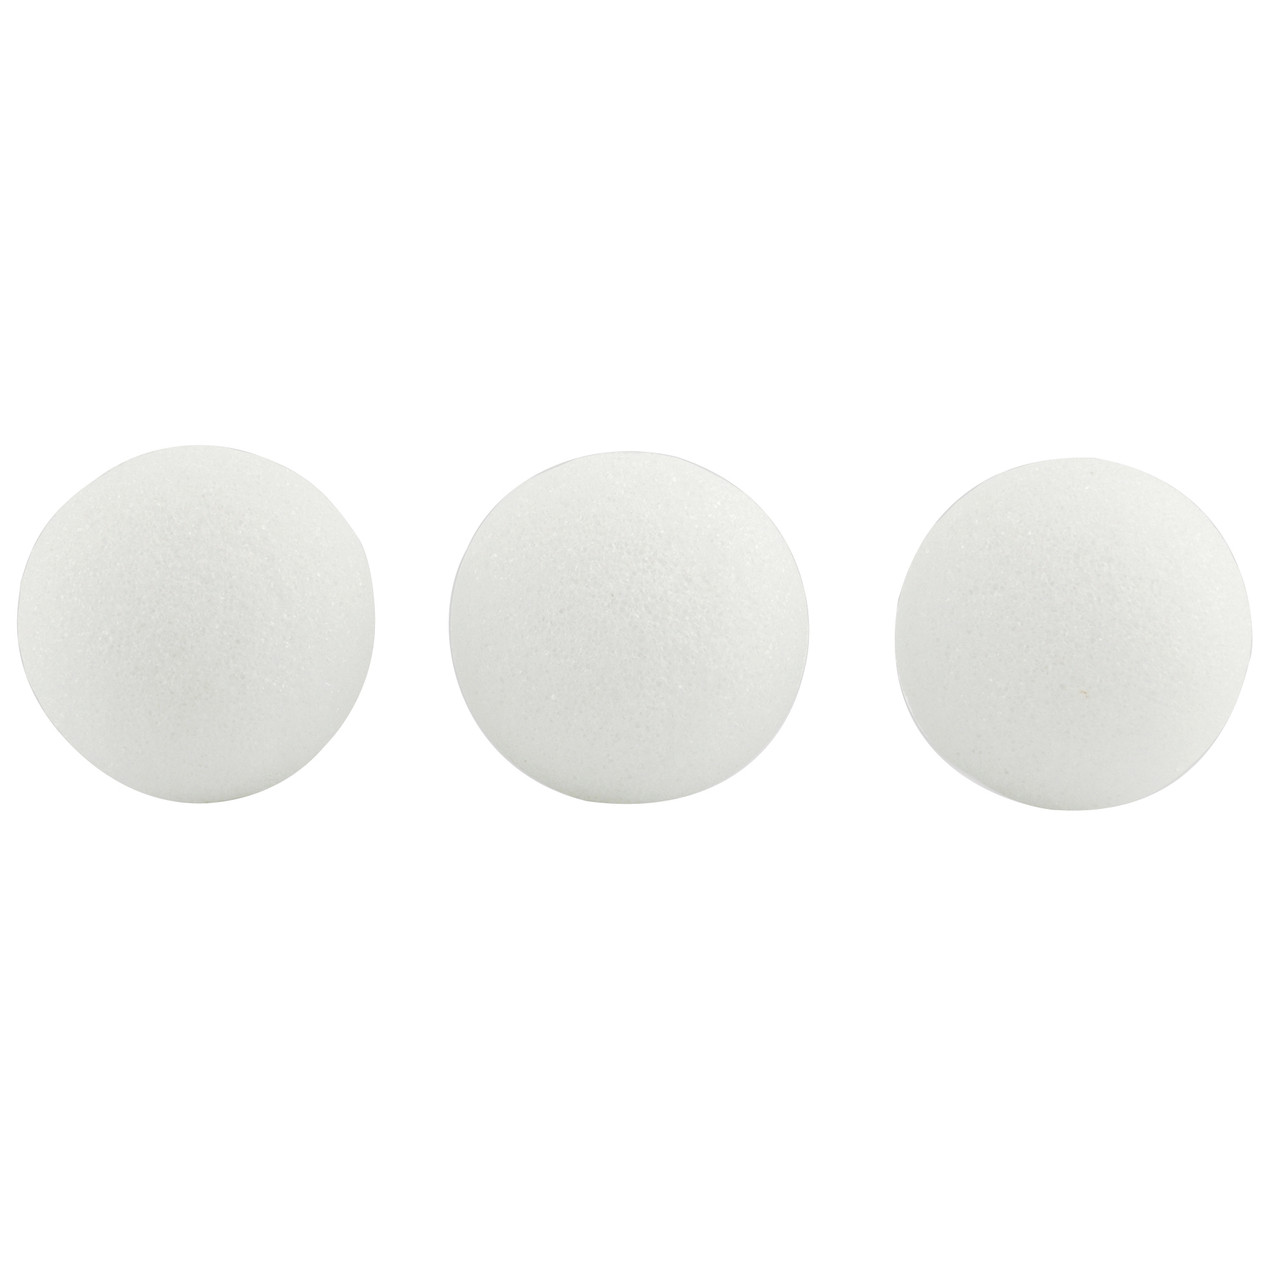 4 Inch Styrofoam Balls Bulk Wholesale 36 Pieces